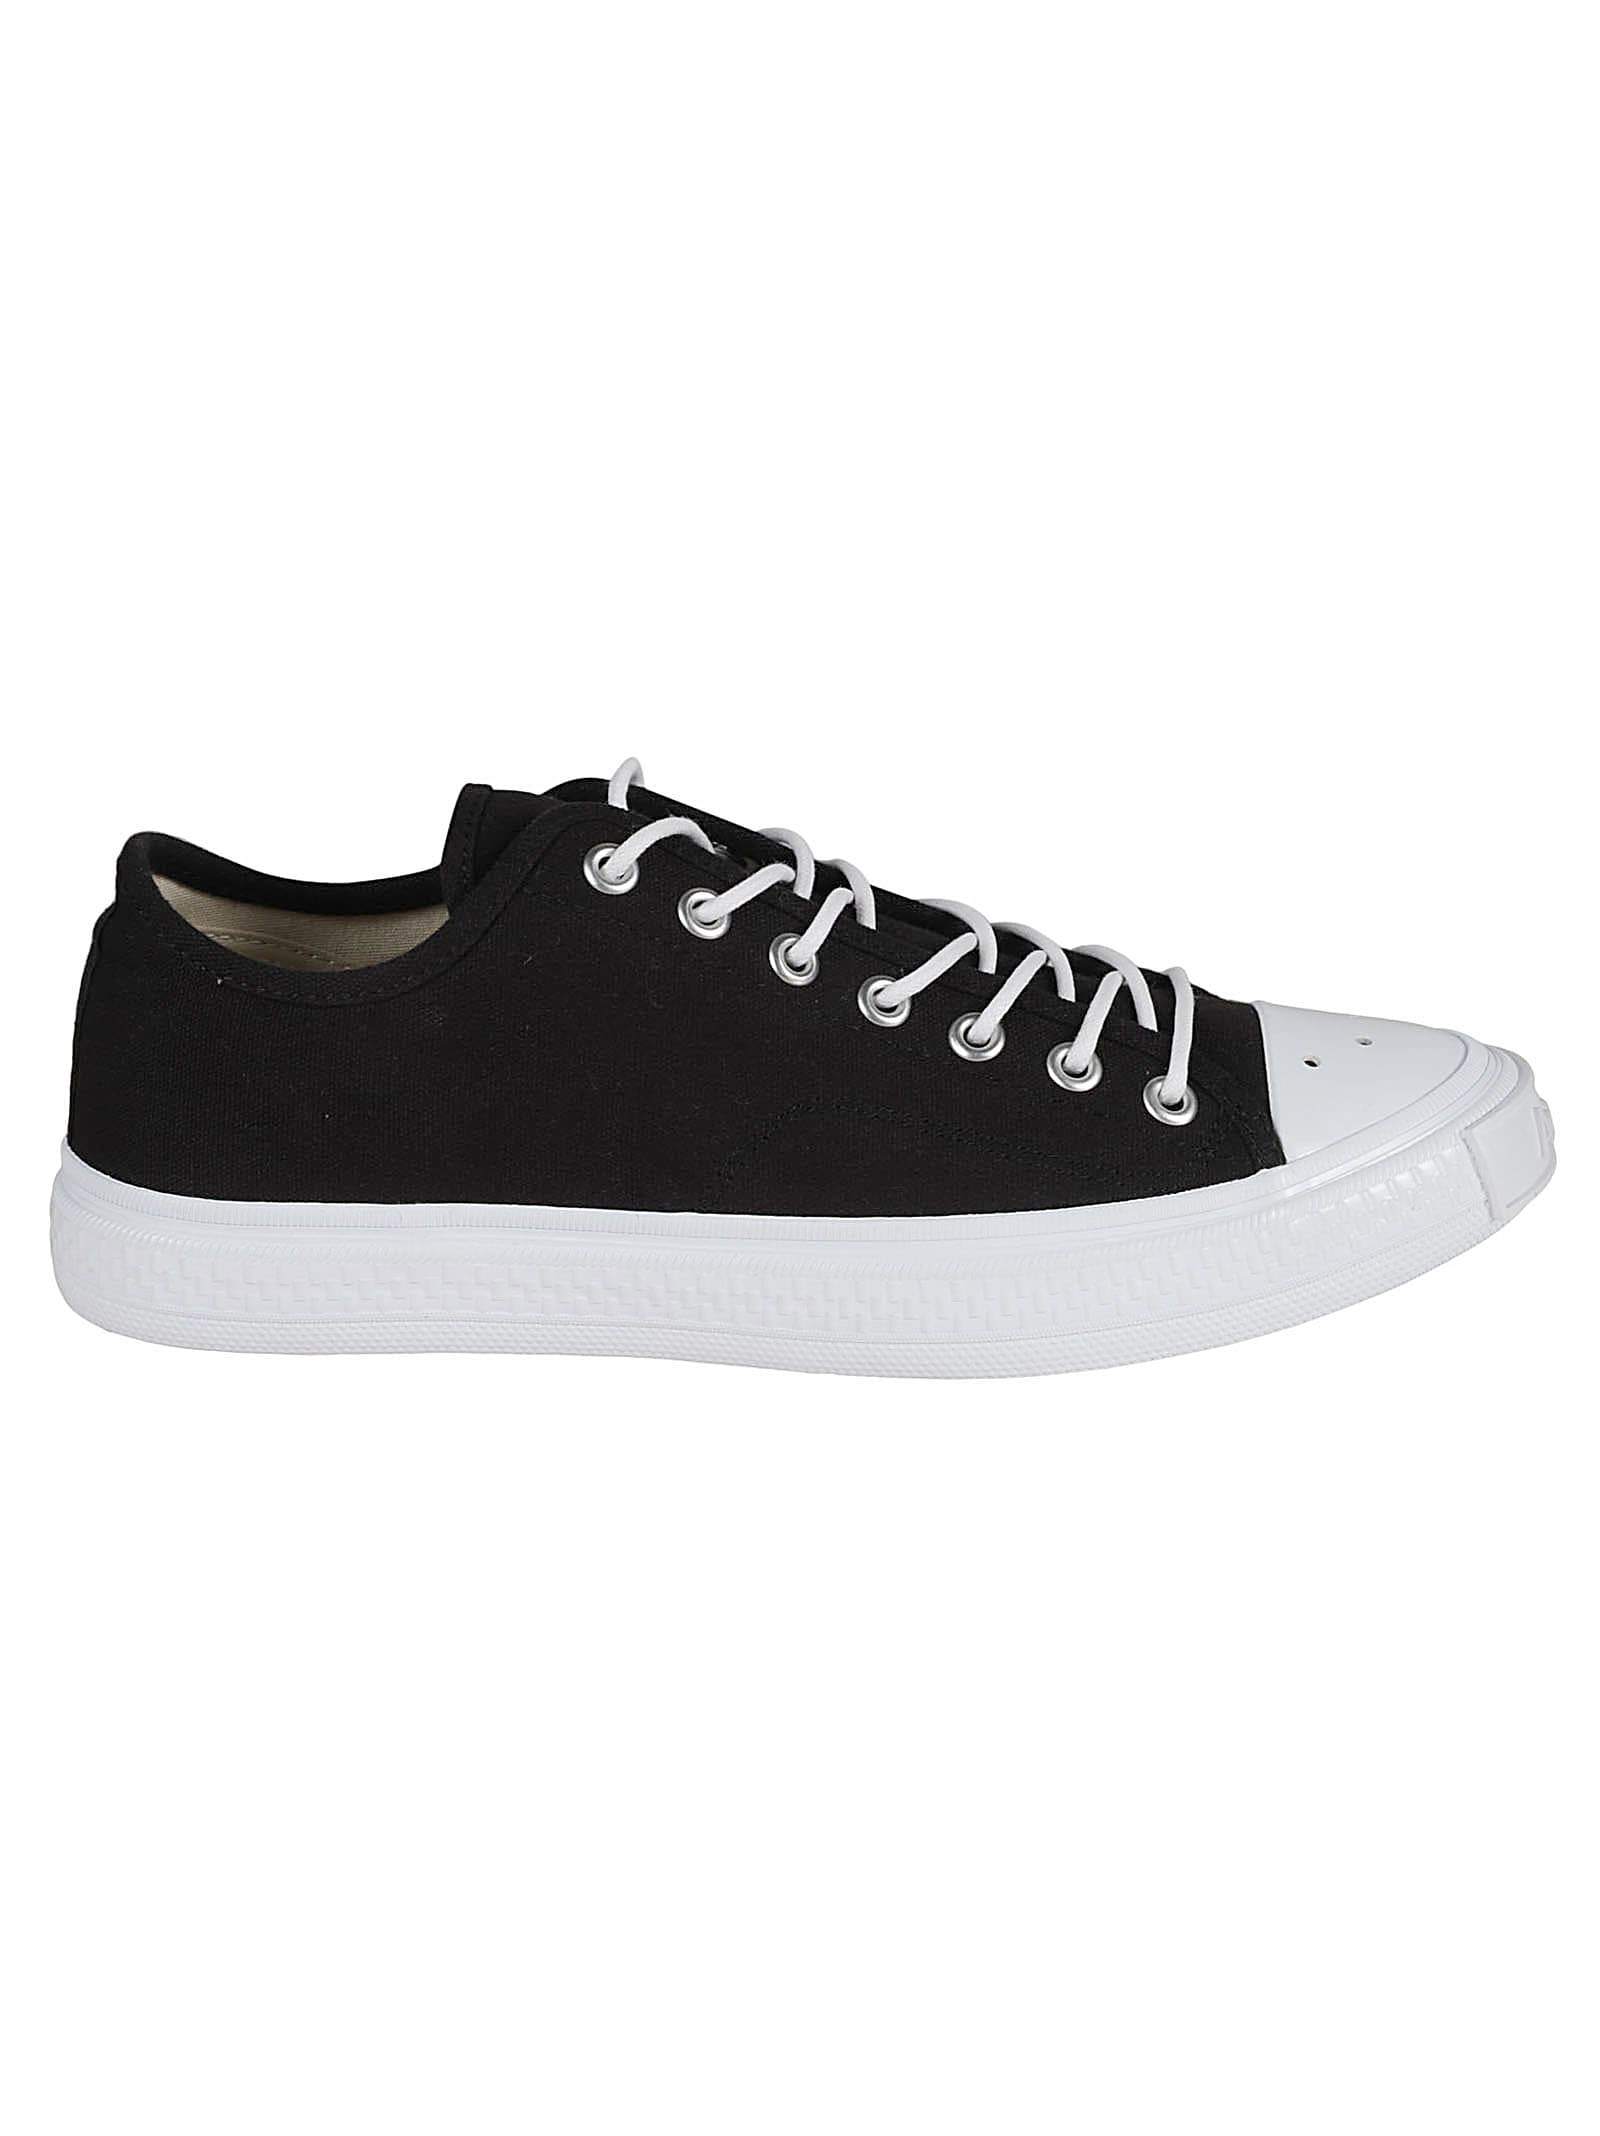 Shop Acne Studios Ballowtag Sneakers In Black/off-white